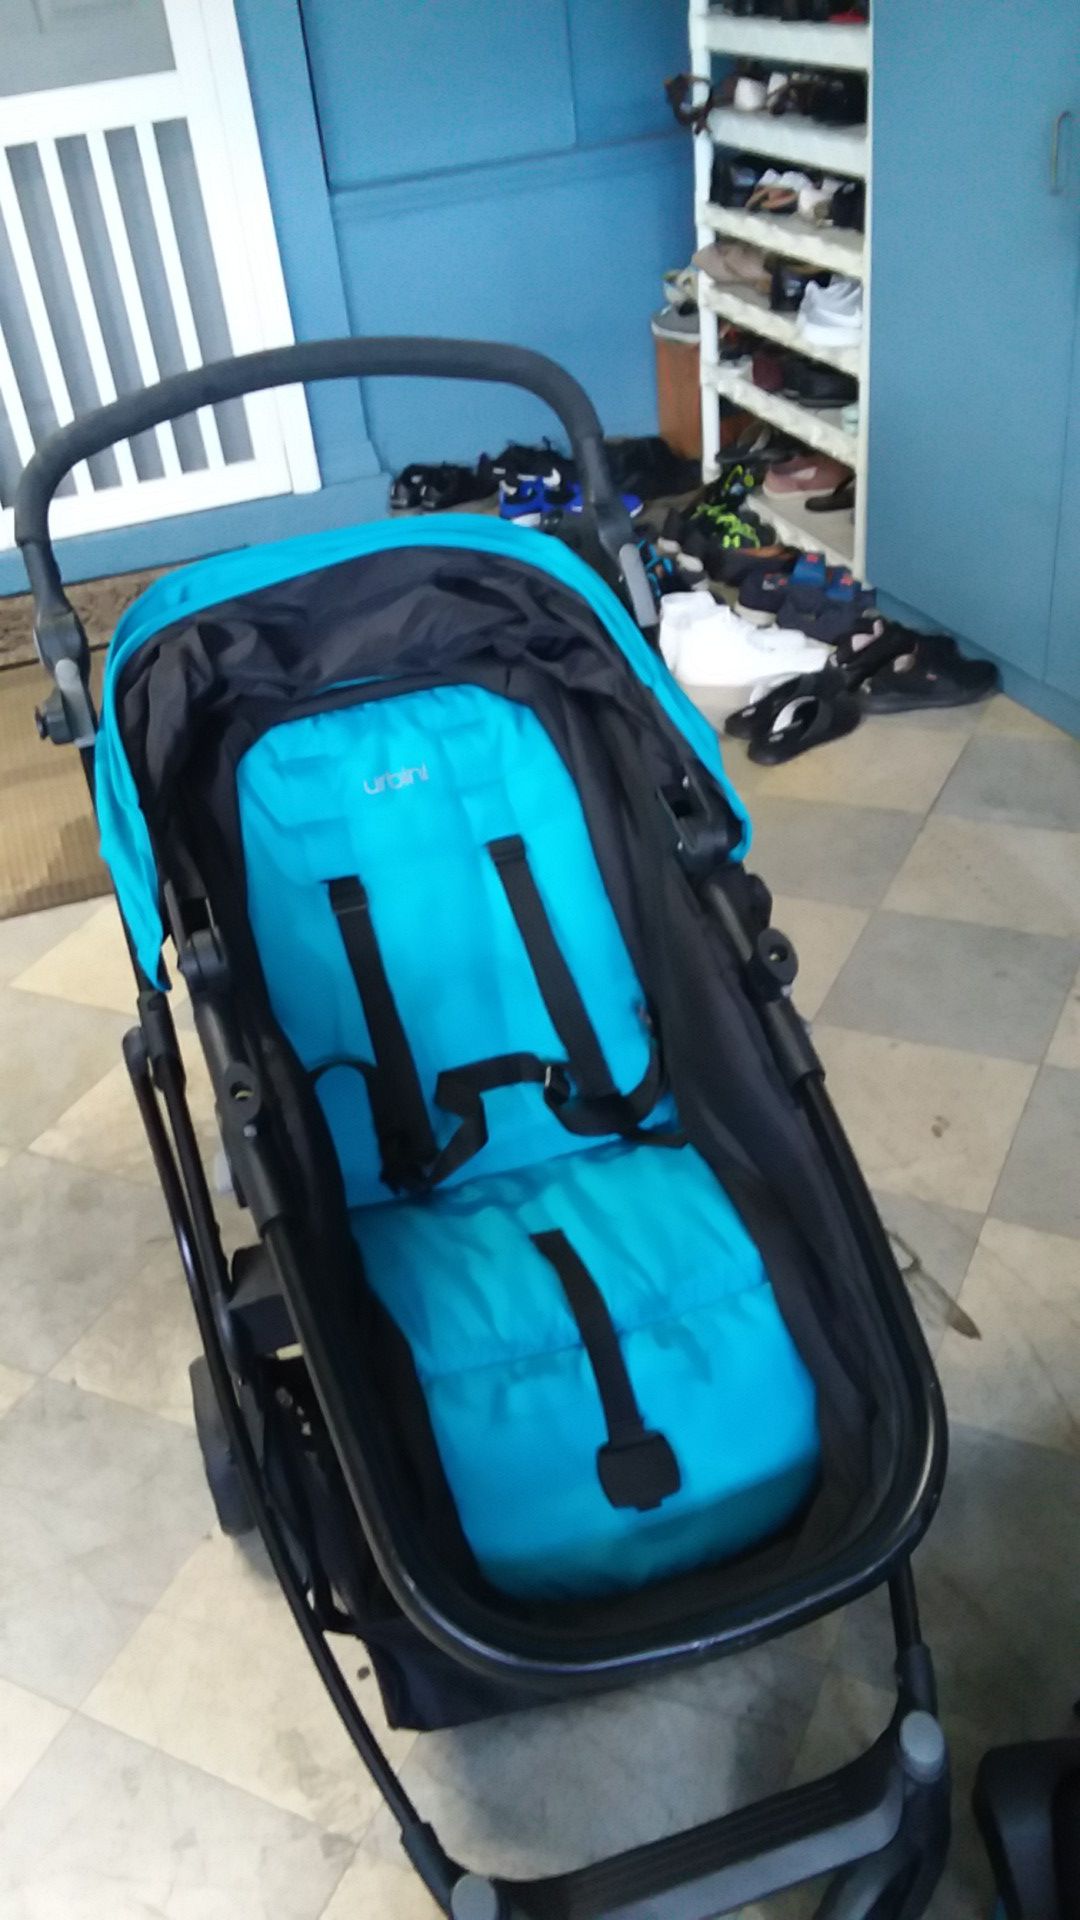 Urbini multi-positional stroller and Car seat